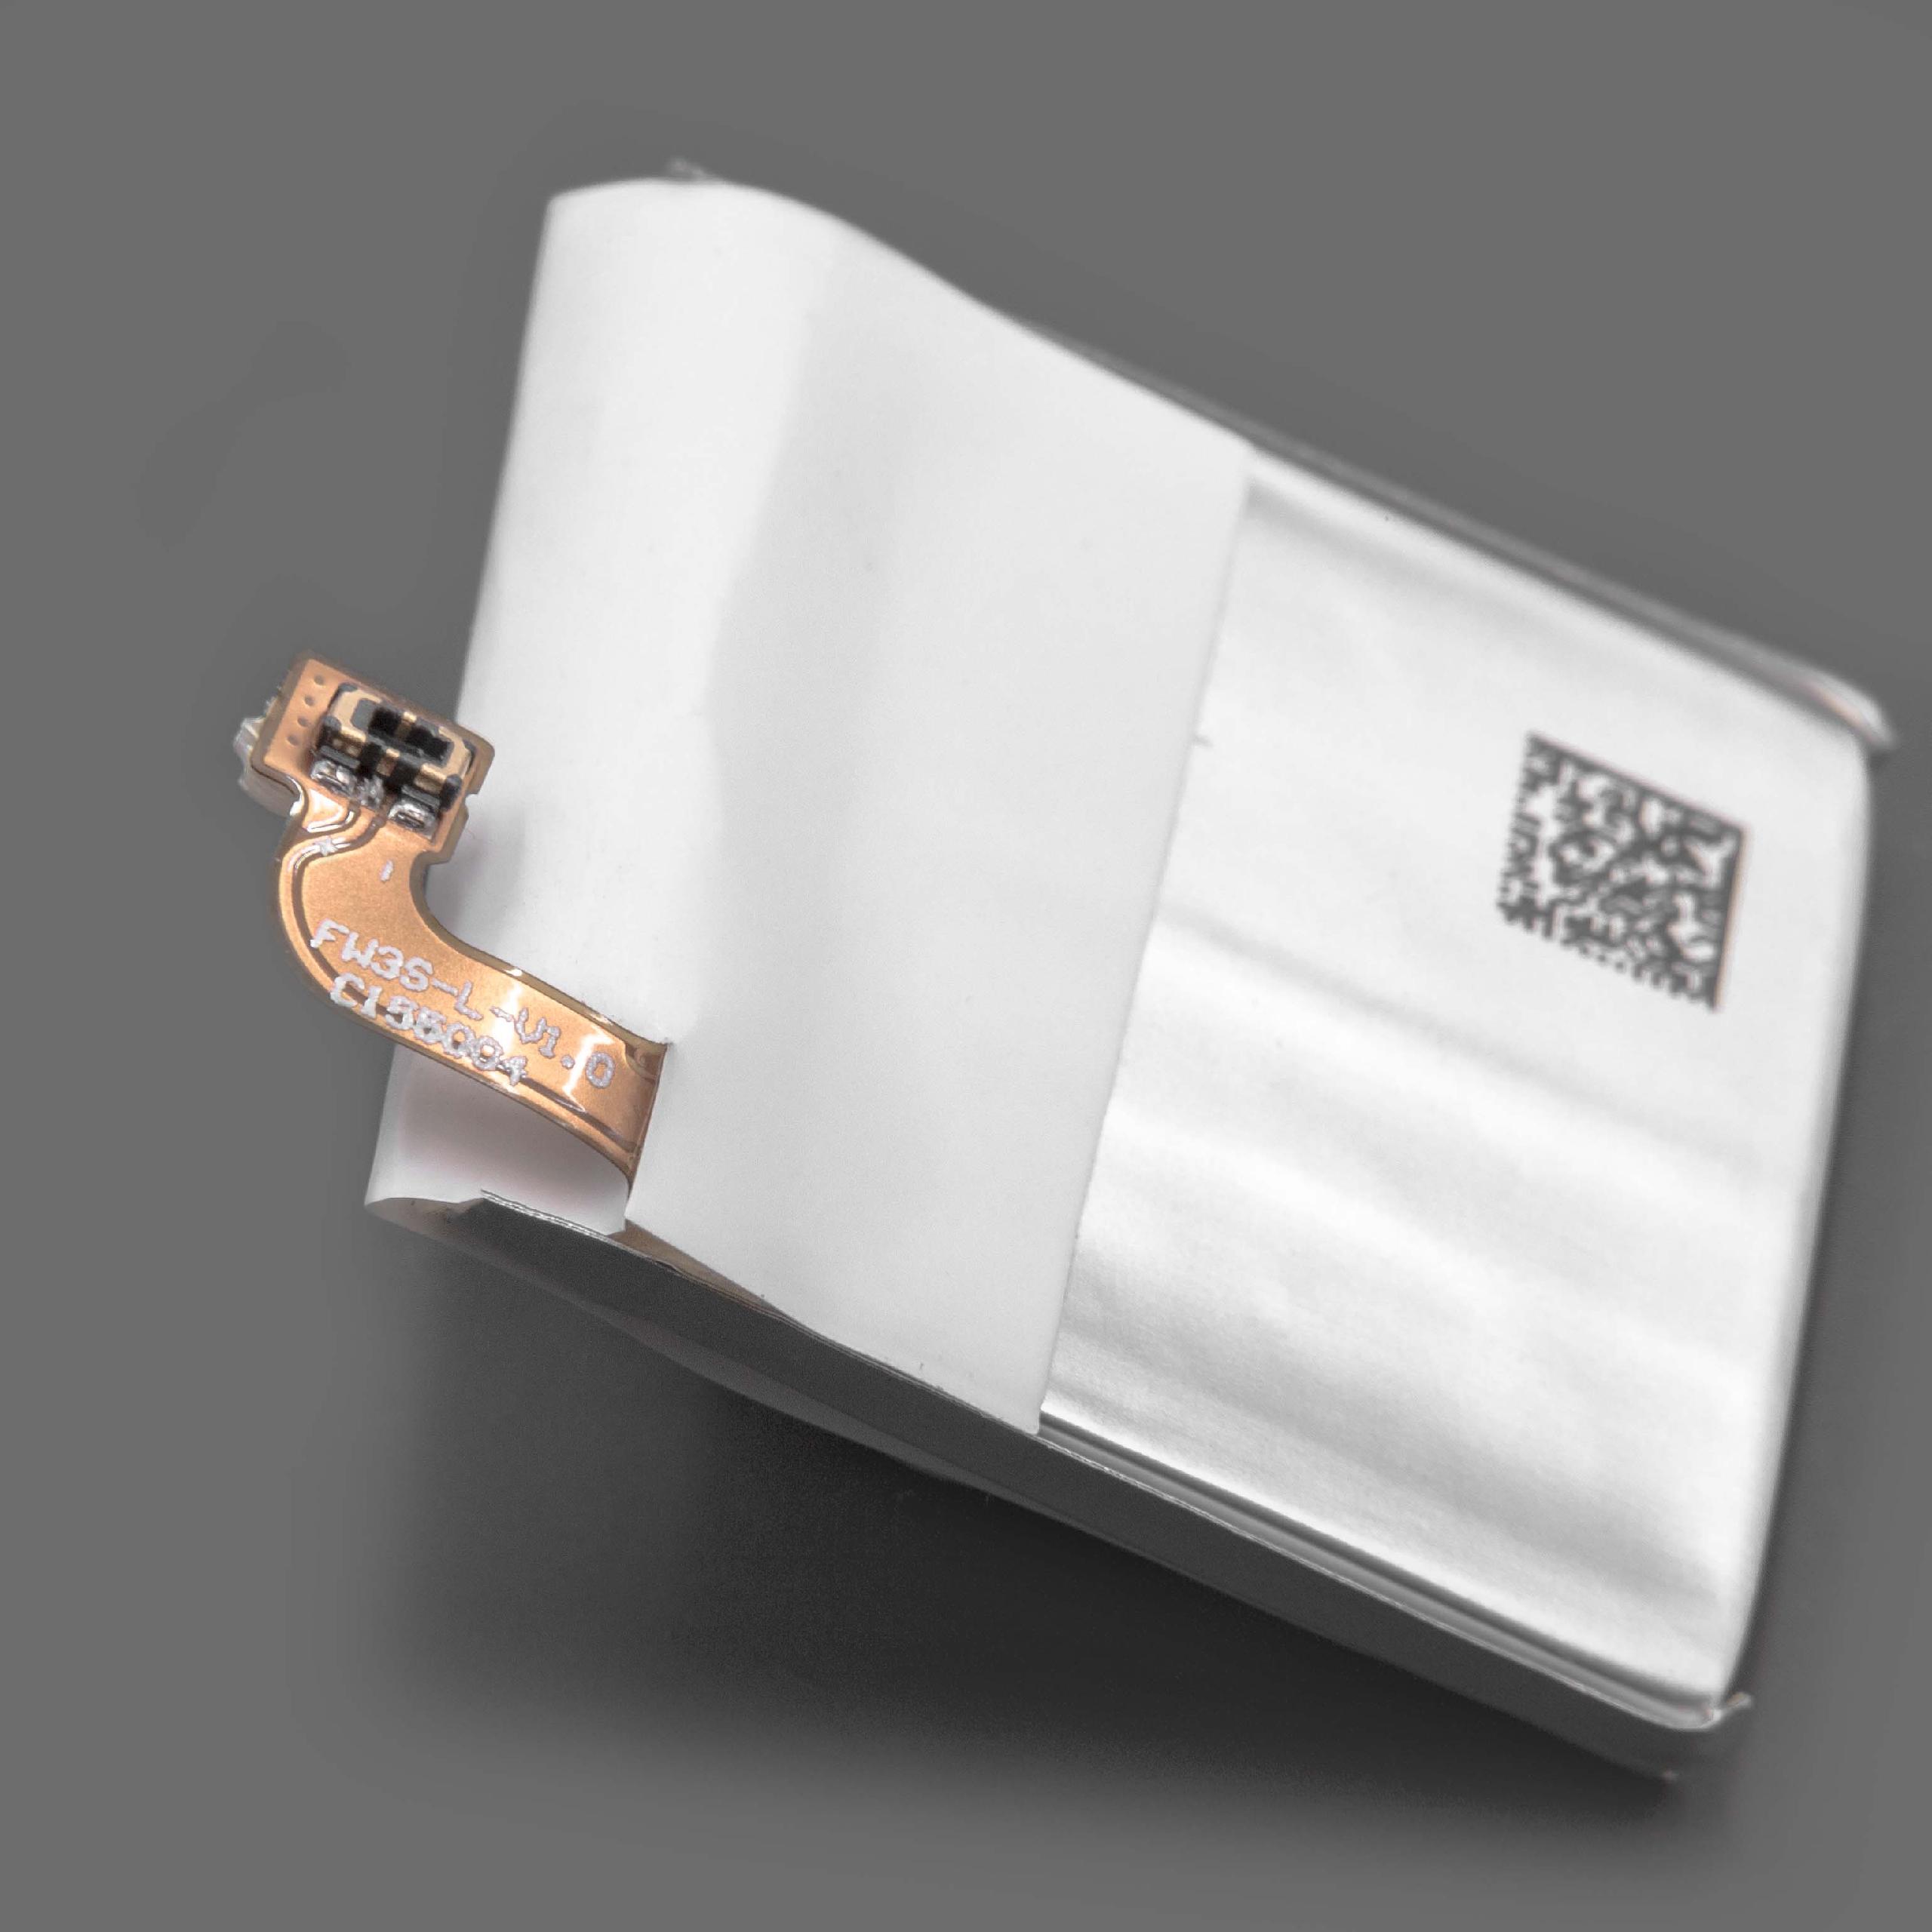 Smartwatch Battery Replacement for Motorola SNN5962A, FW3L - 375mAh 3.7V Li-polymer